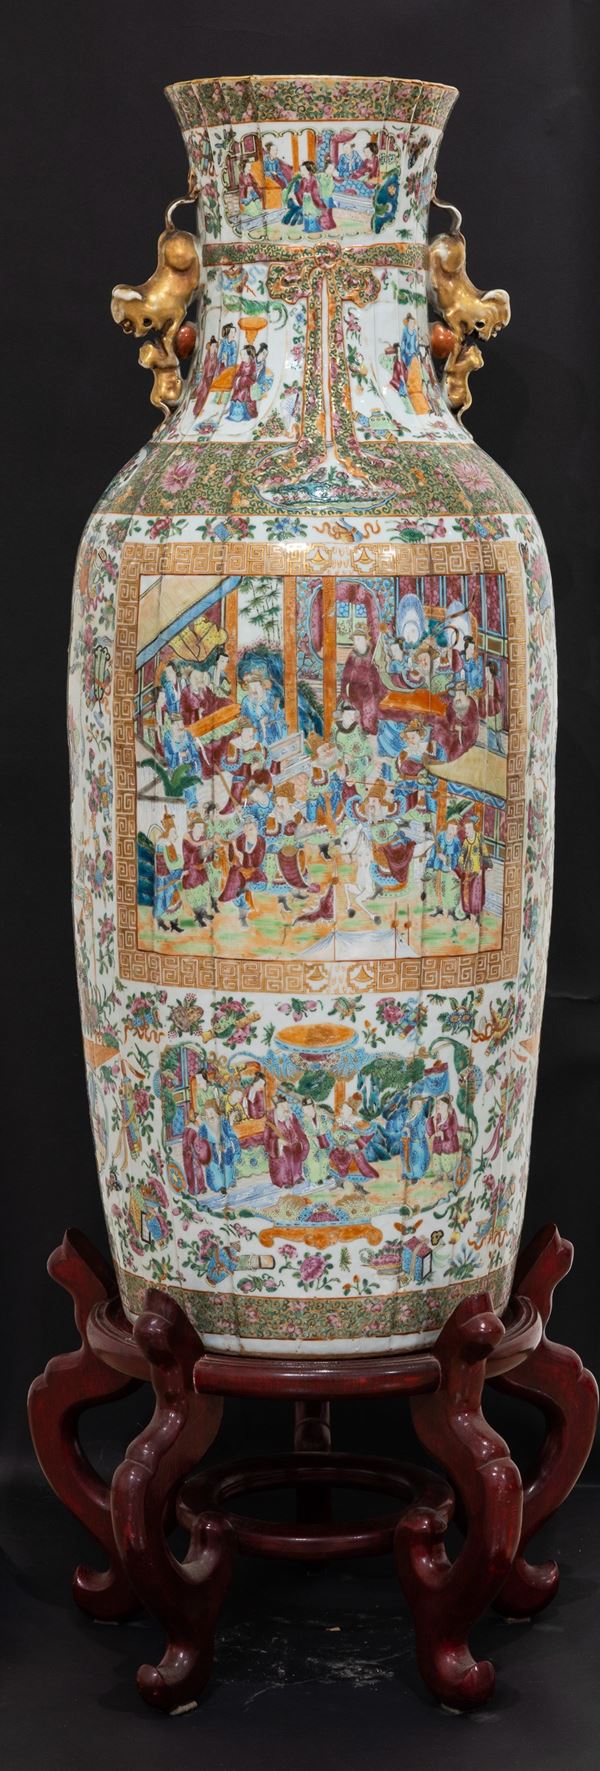 A porcelain vase, Canton, China, Qing Dynasty